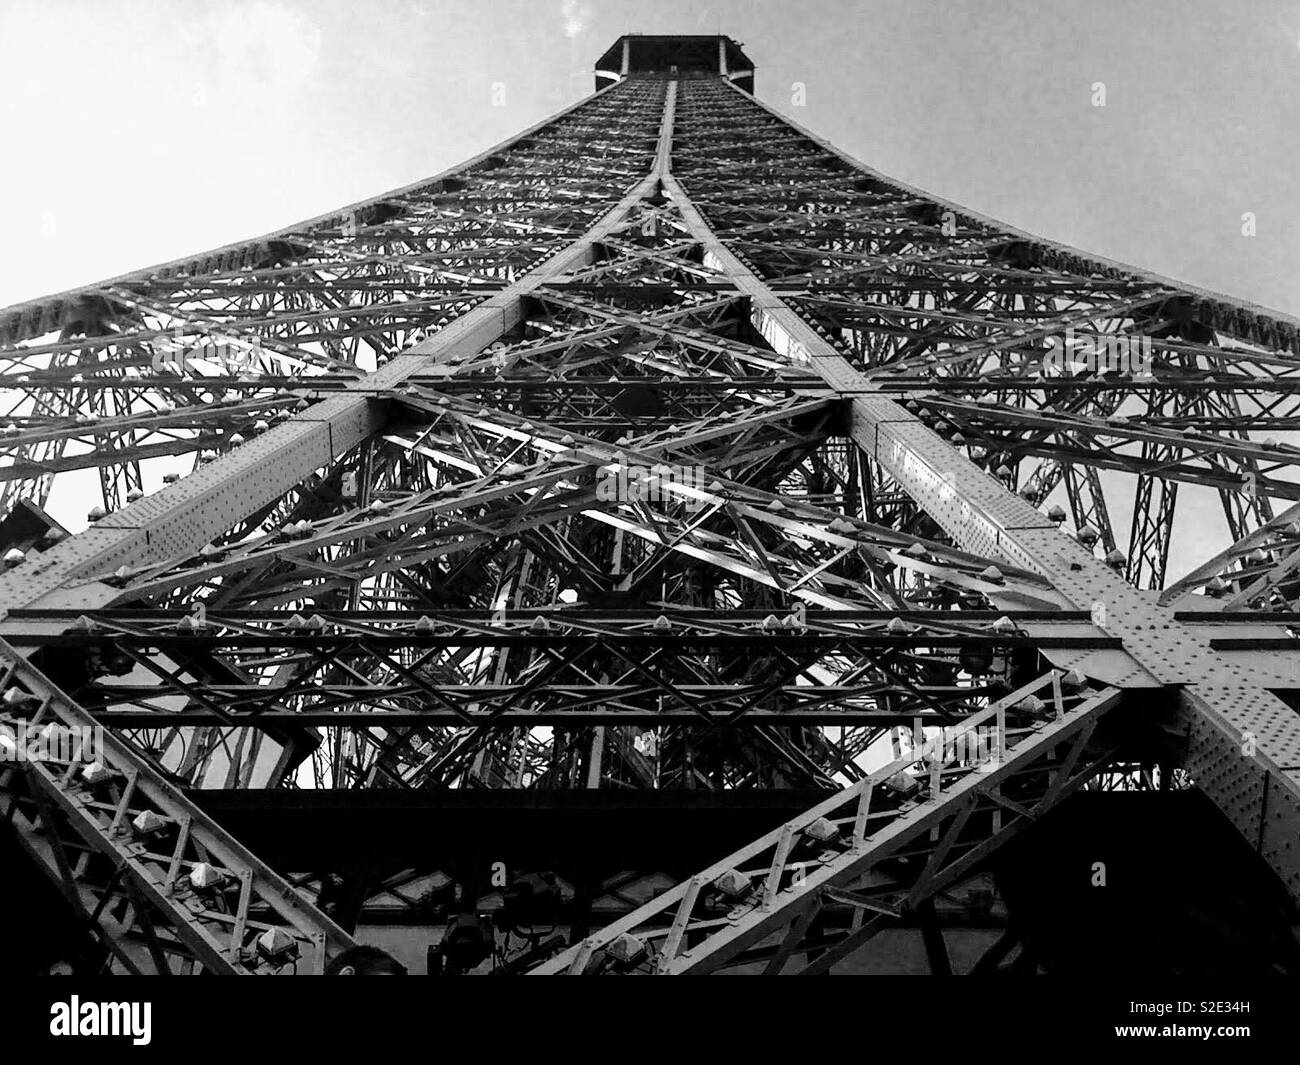 Eiffel Tower from below Stock Photo